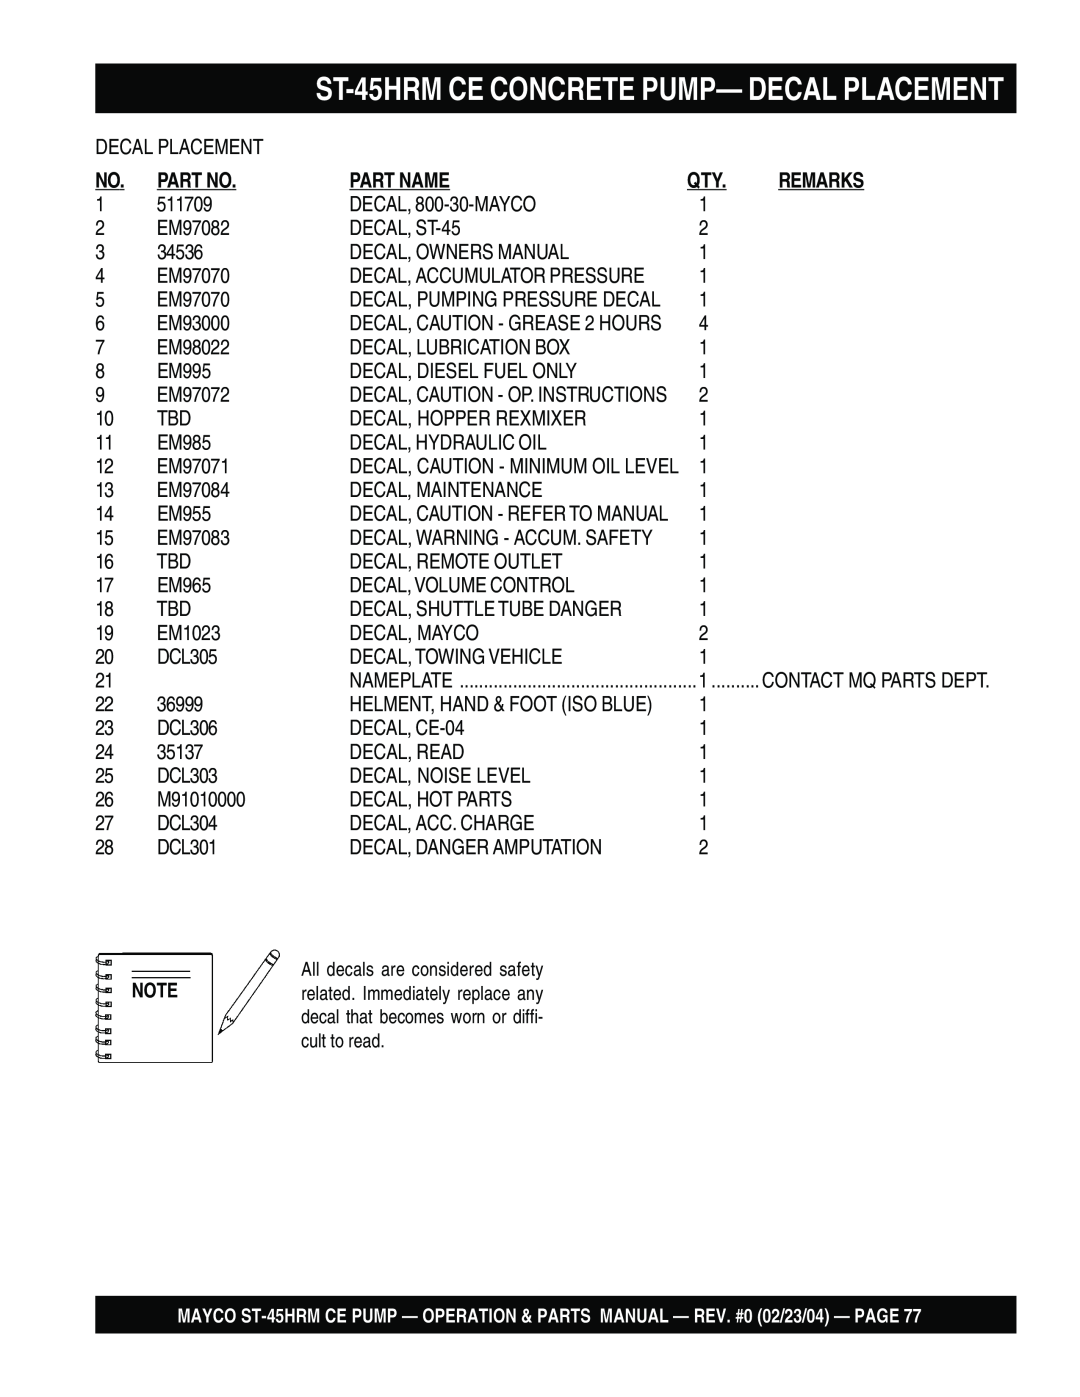 Multiquip ST-45HRM CE manual ST-45HRMCE CONCRETE PUMP— DECAL PLACEMENT, Decal Placement, Part No, Part Name, Remarks 